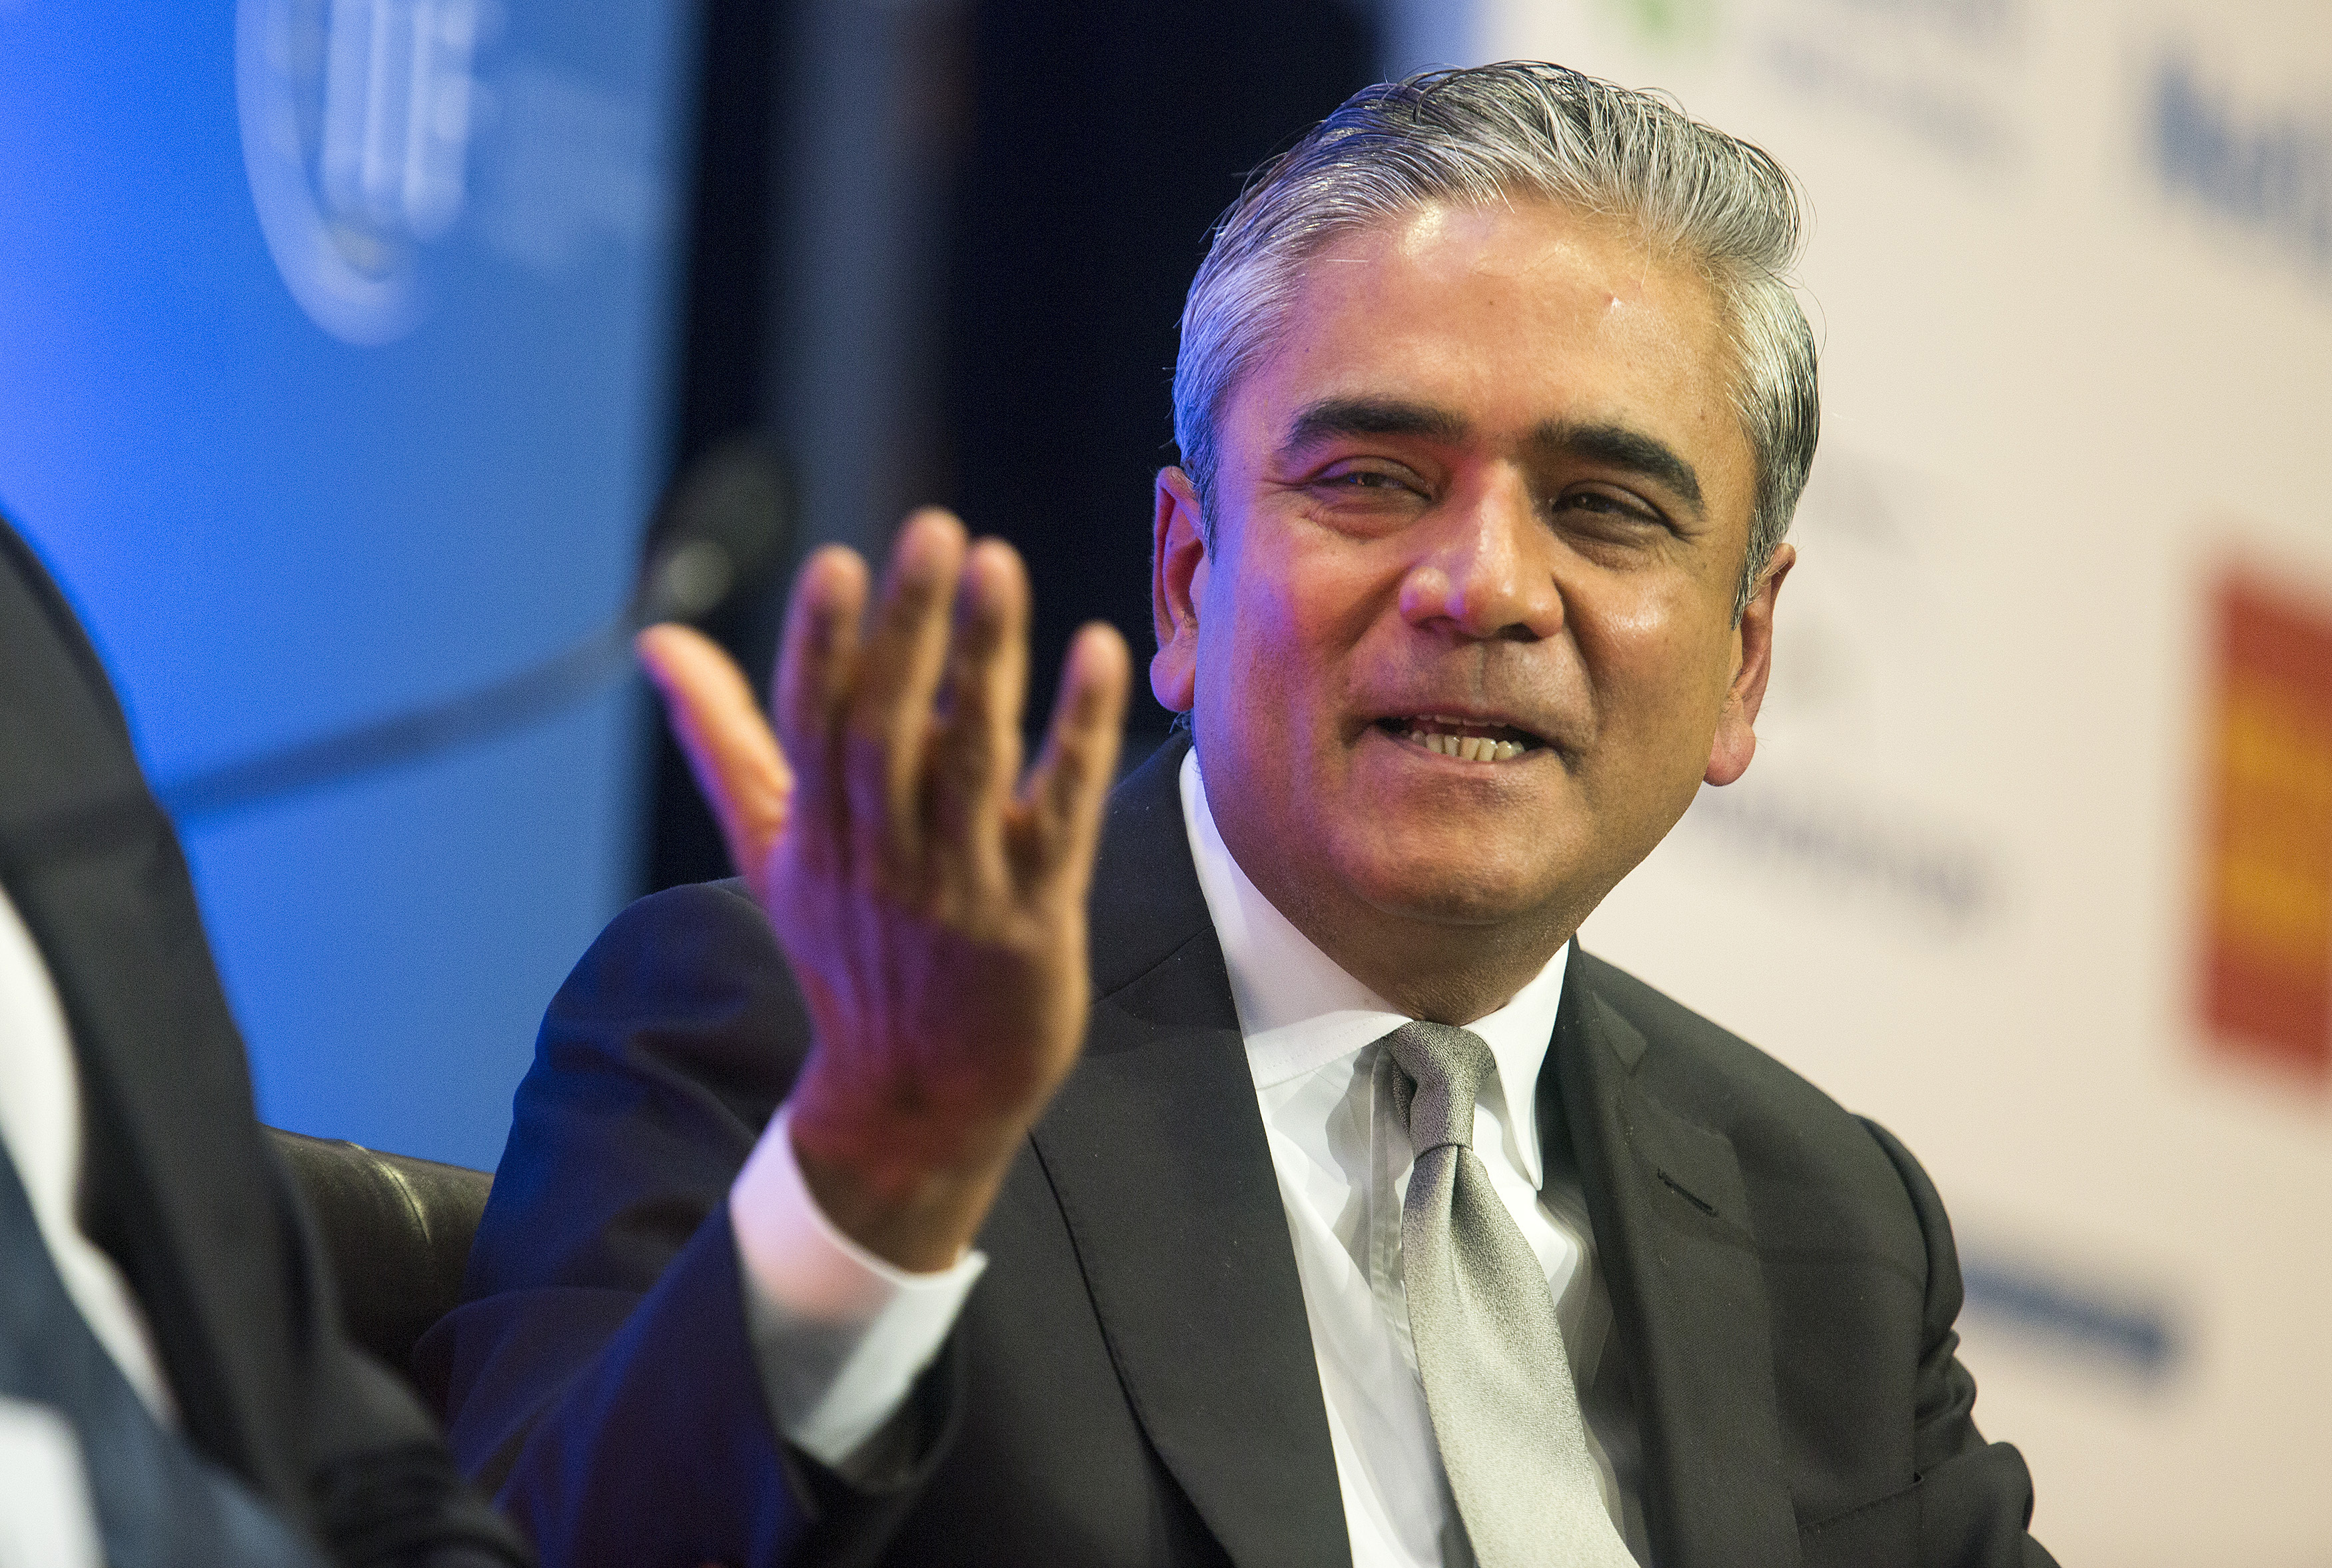 Deutsche Bank Co-Chief Executive Jain speaks during the Institute of International Finance Annual Meeting in Washington